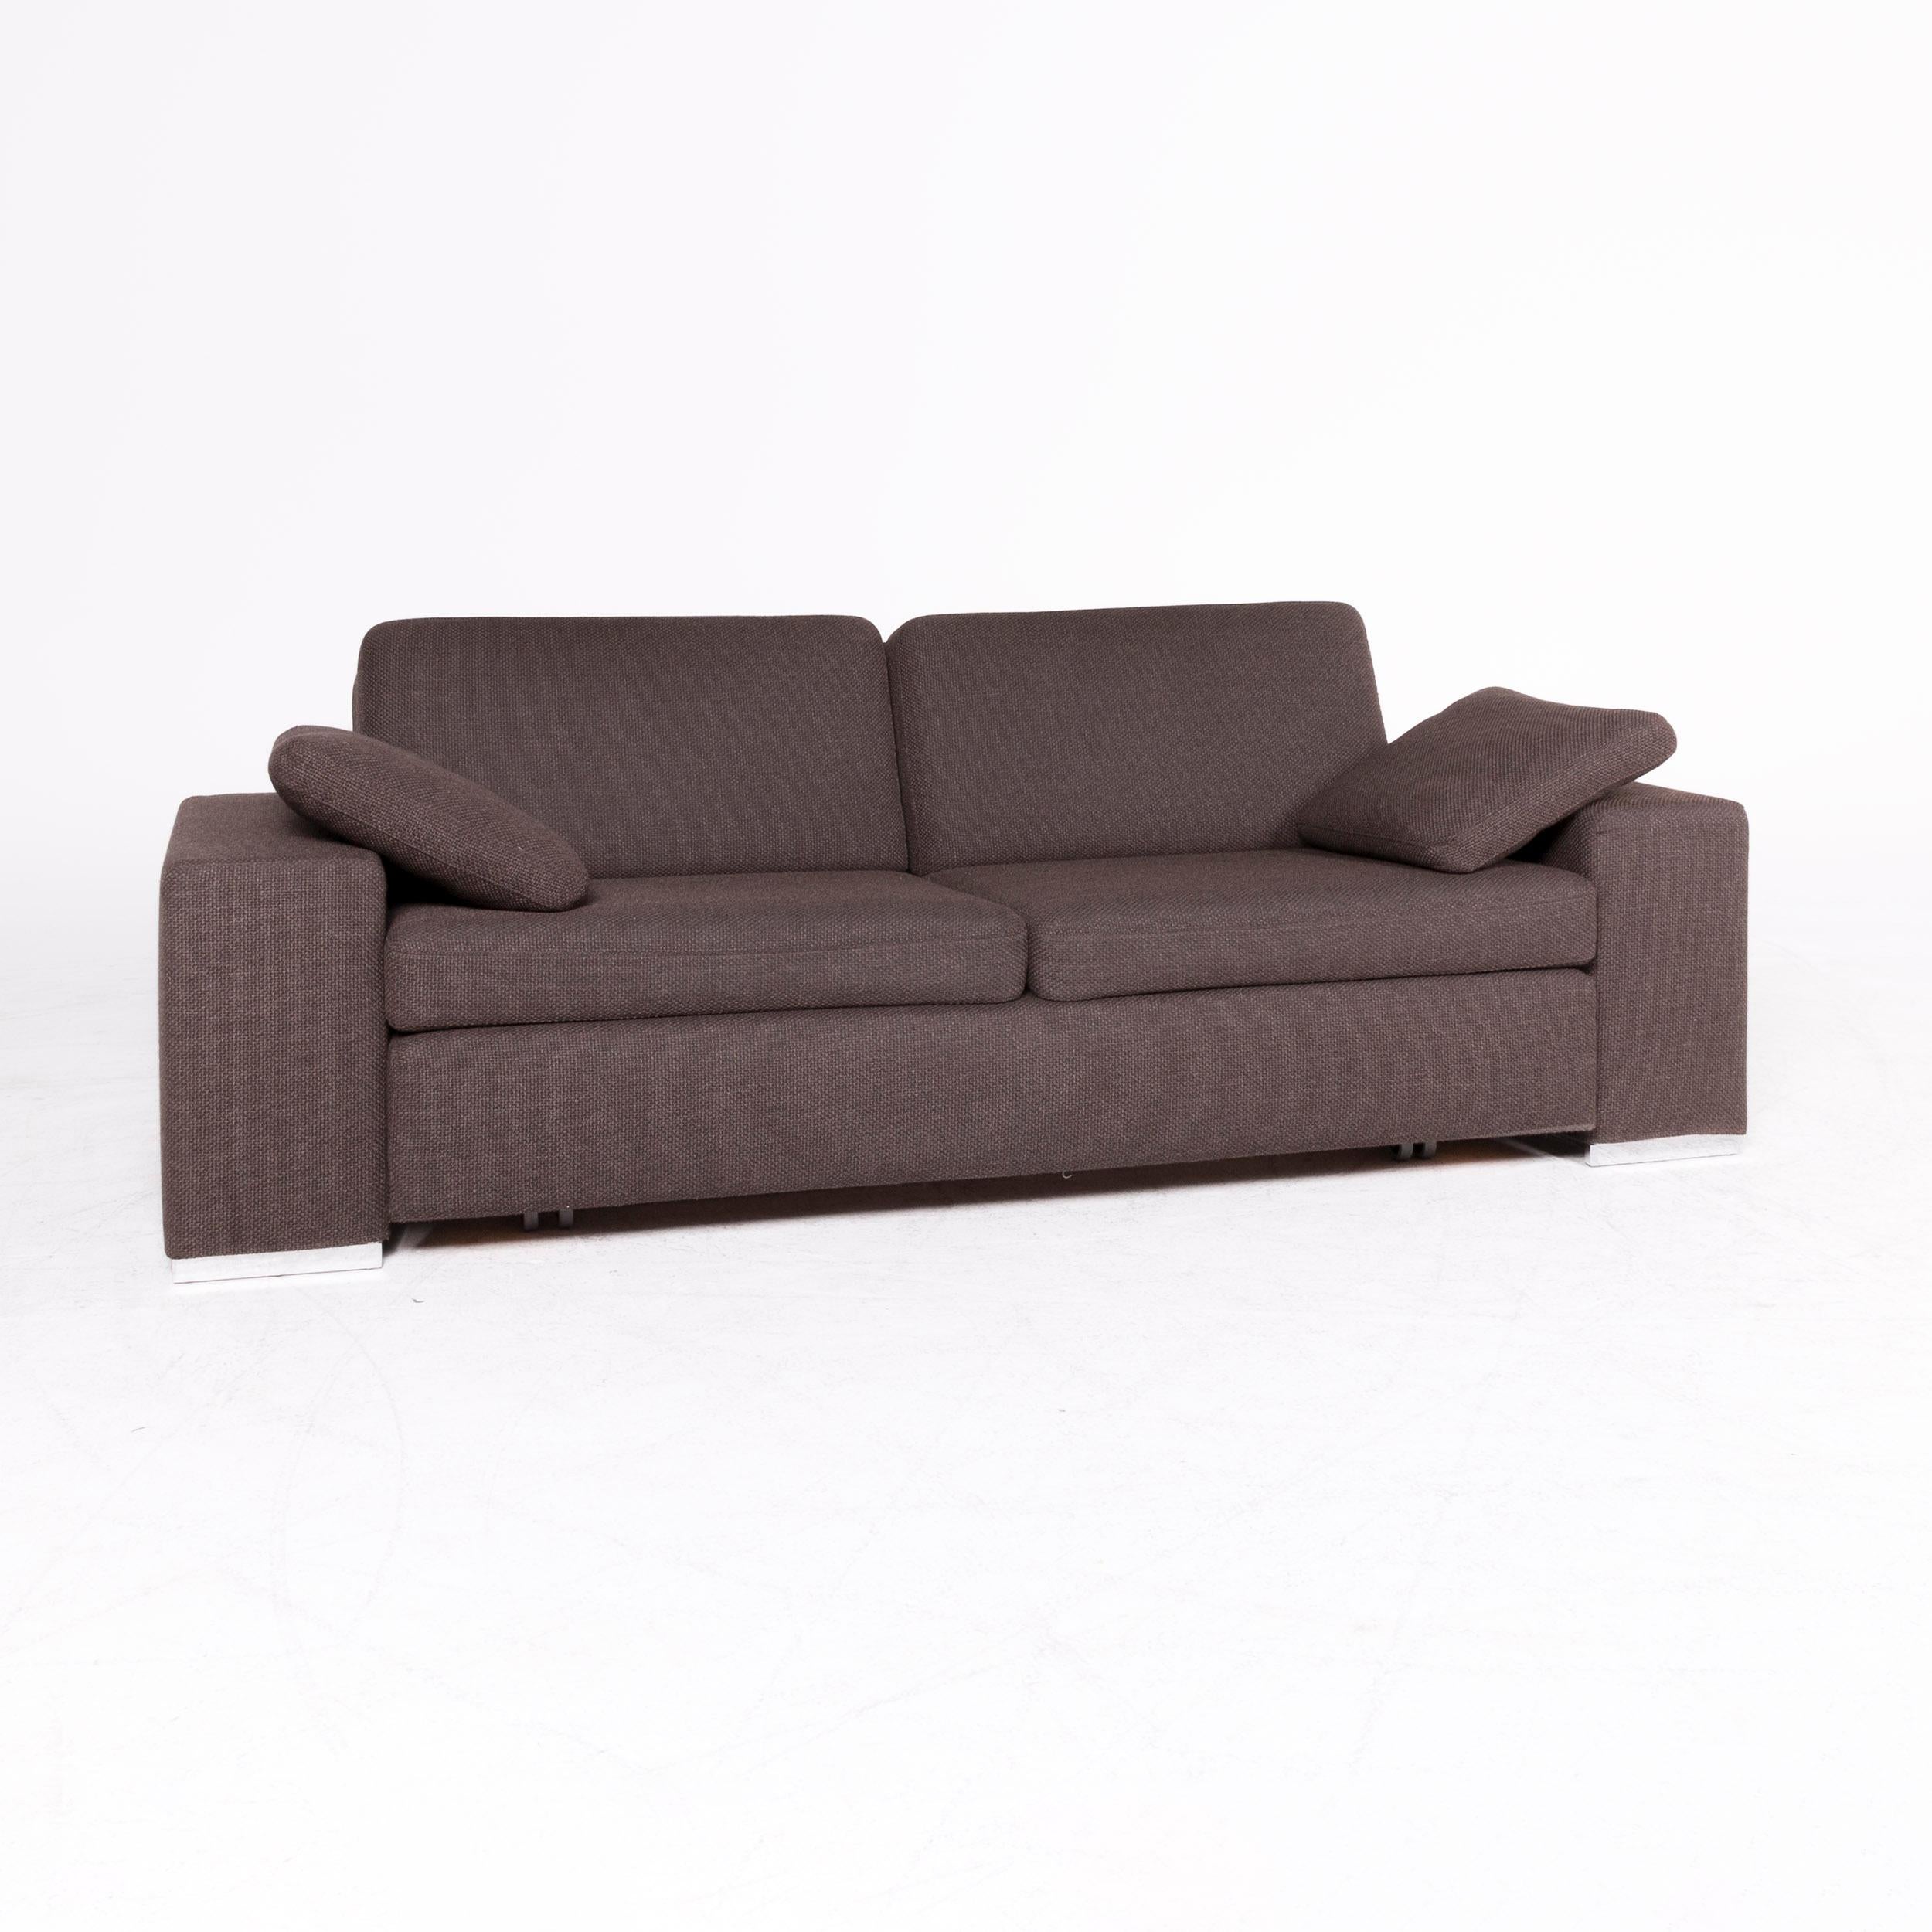 Modern Brühl & Sippold Designer Fabric Sofa Brown Two-Seat Sofa Function Sofa Bed